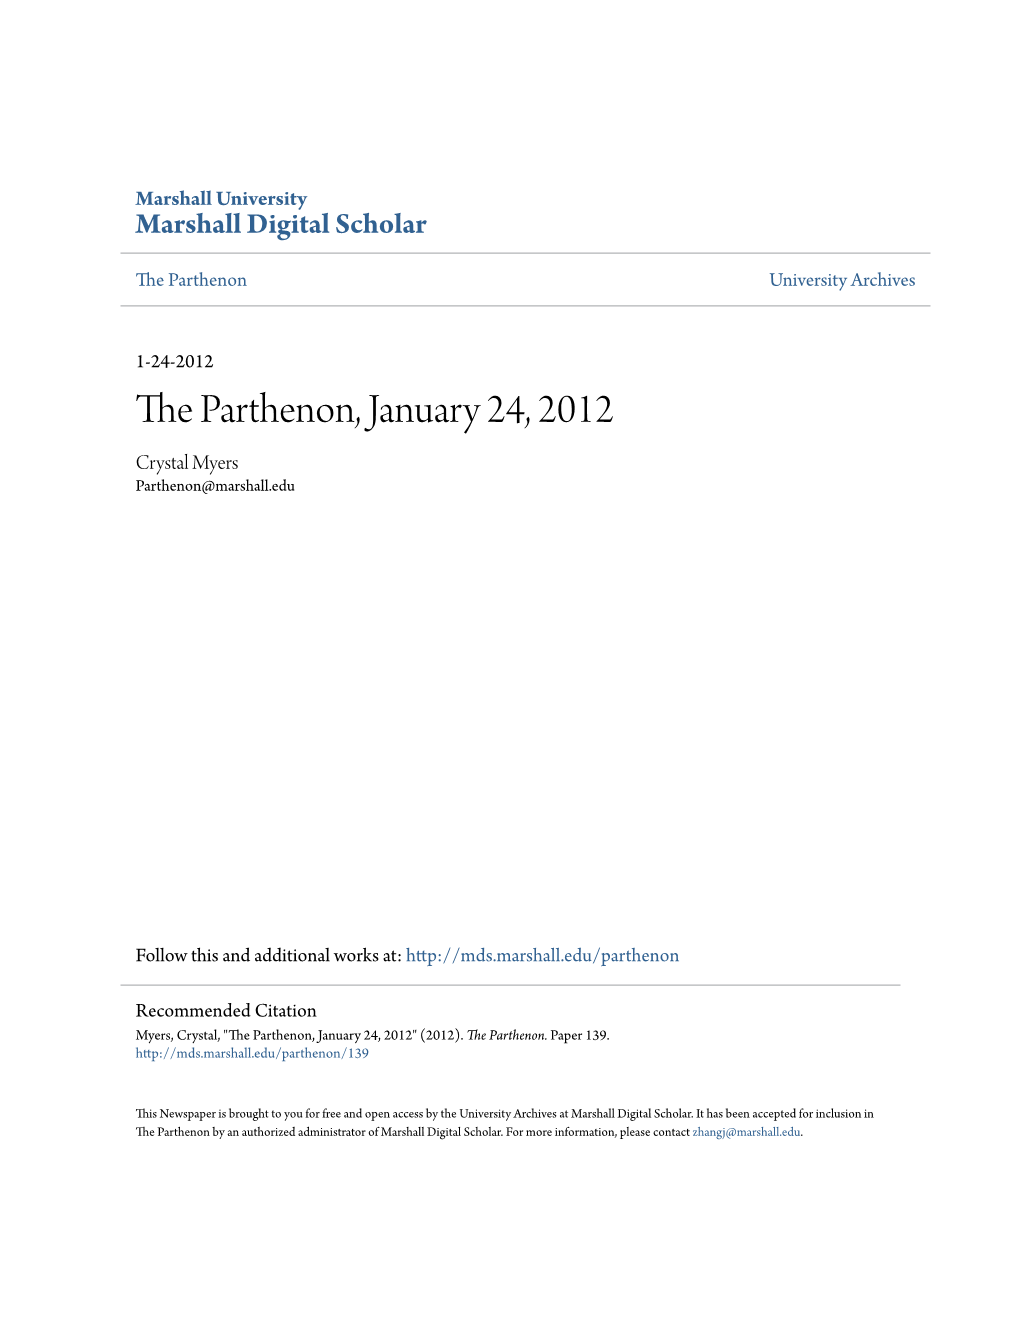 The Parthenon, January 24, 2012